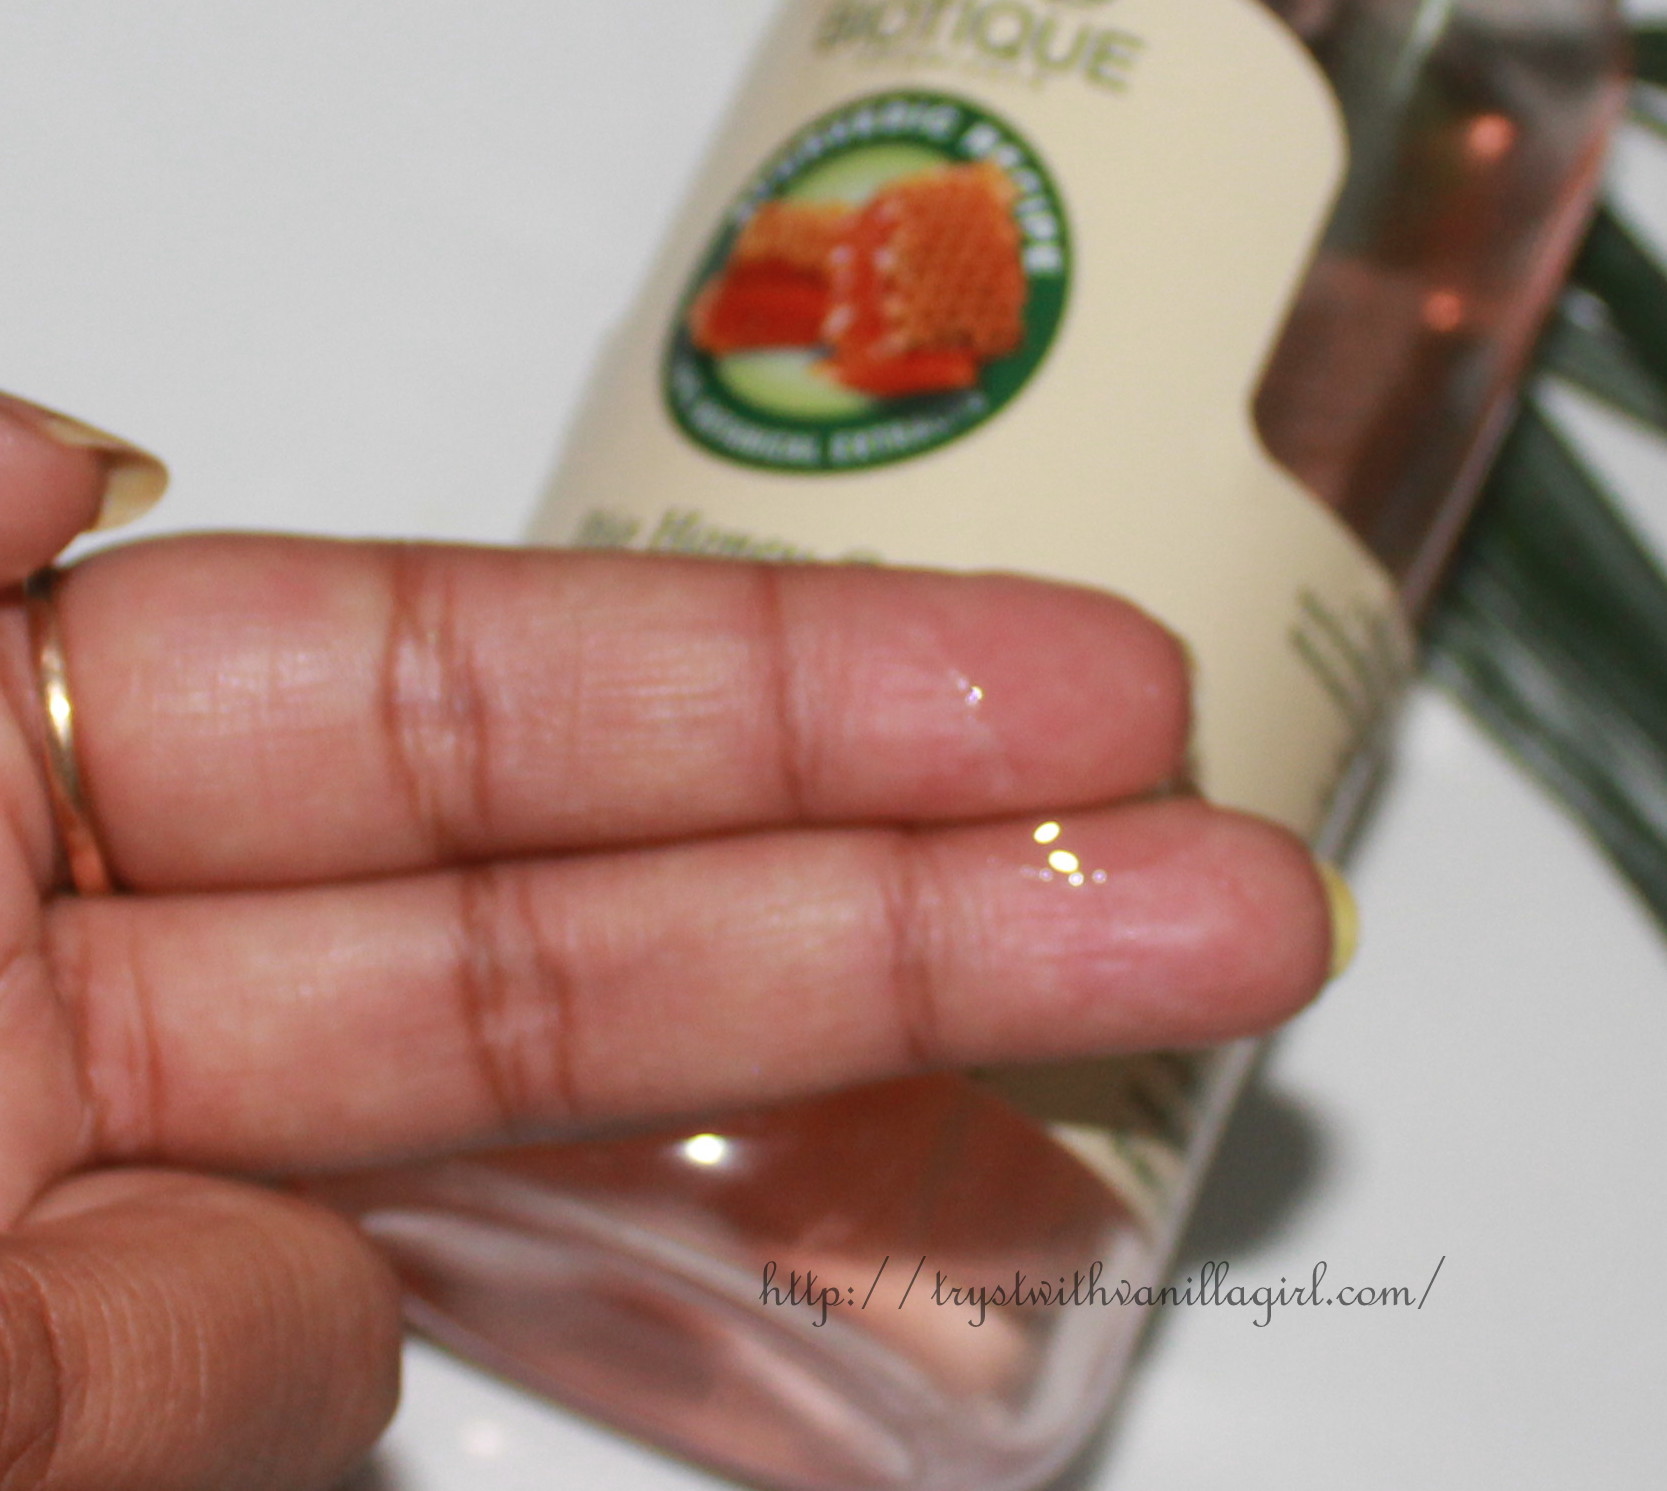 BIOTIQUE Bio Honey Gel Hydrating Face Wash Review